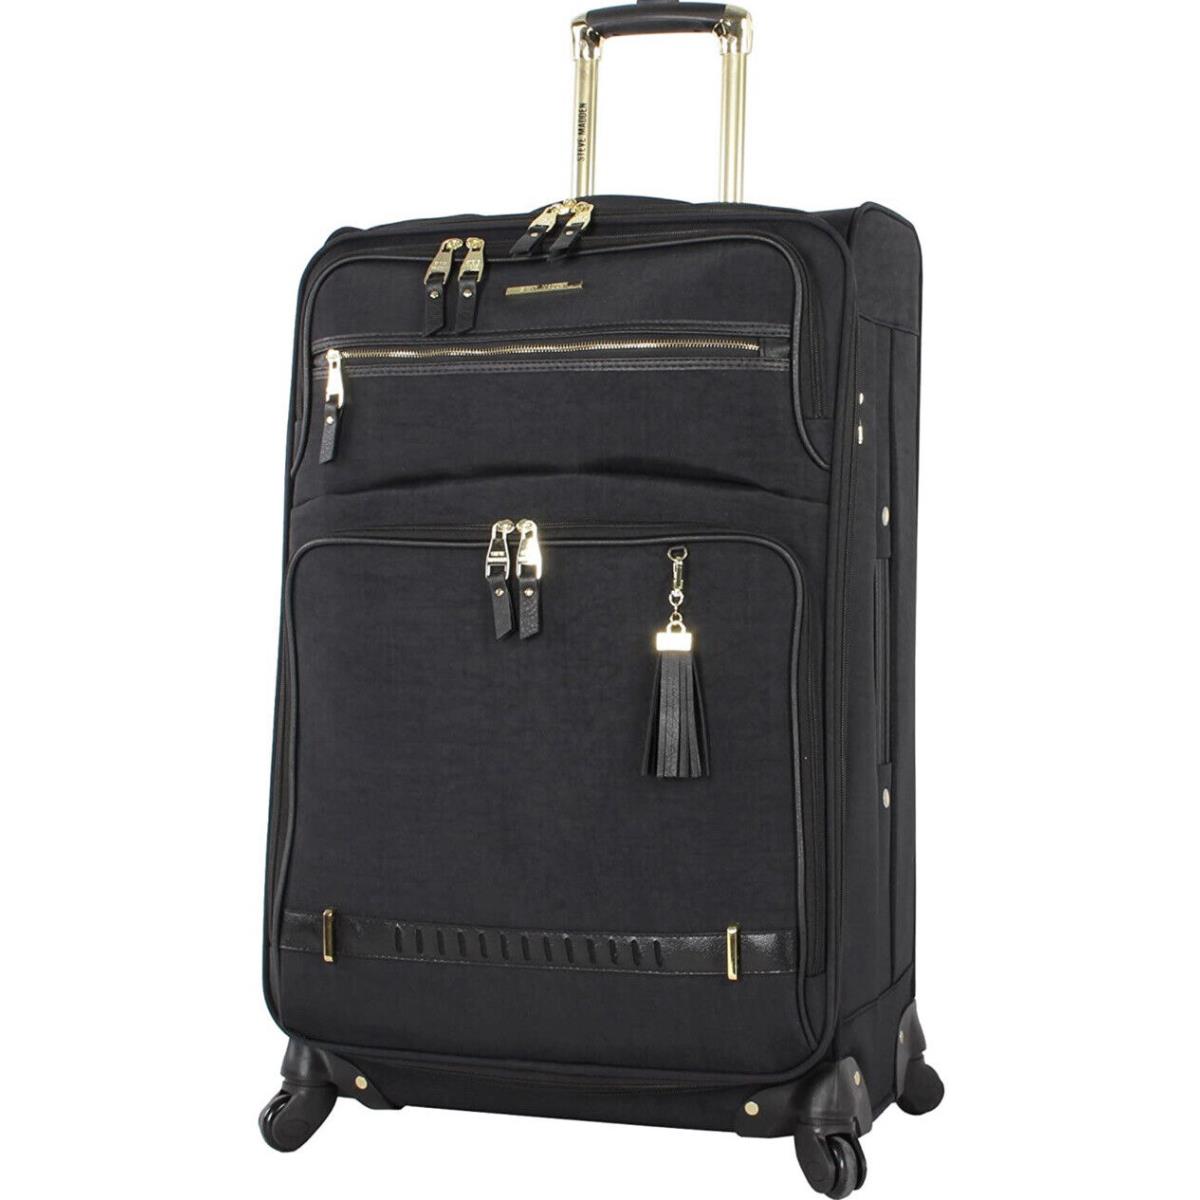 Steve Madden Designer Luggage Collection 3-PC Softside Suitcases Black